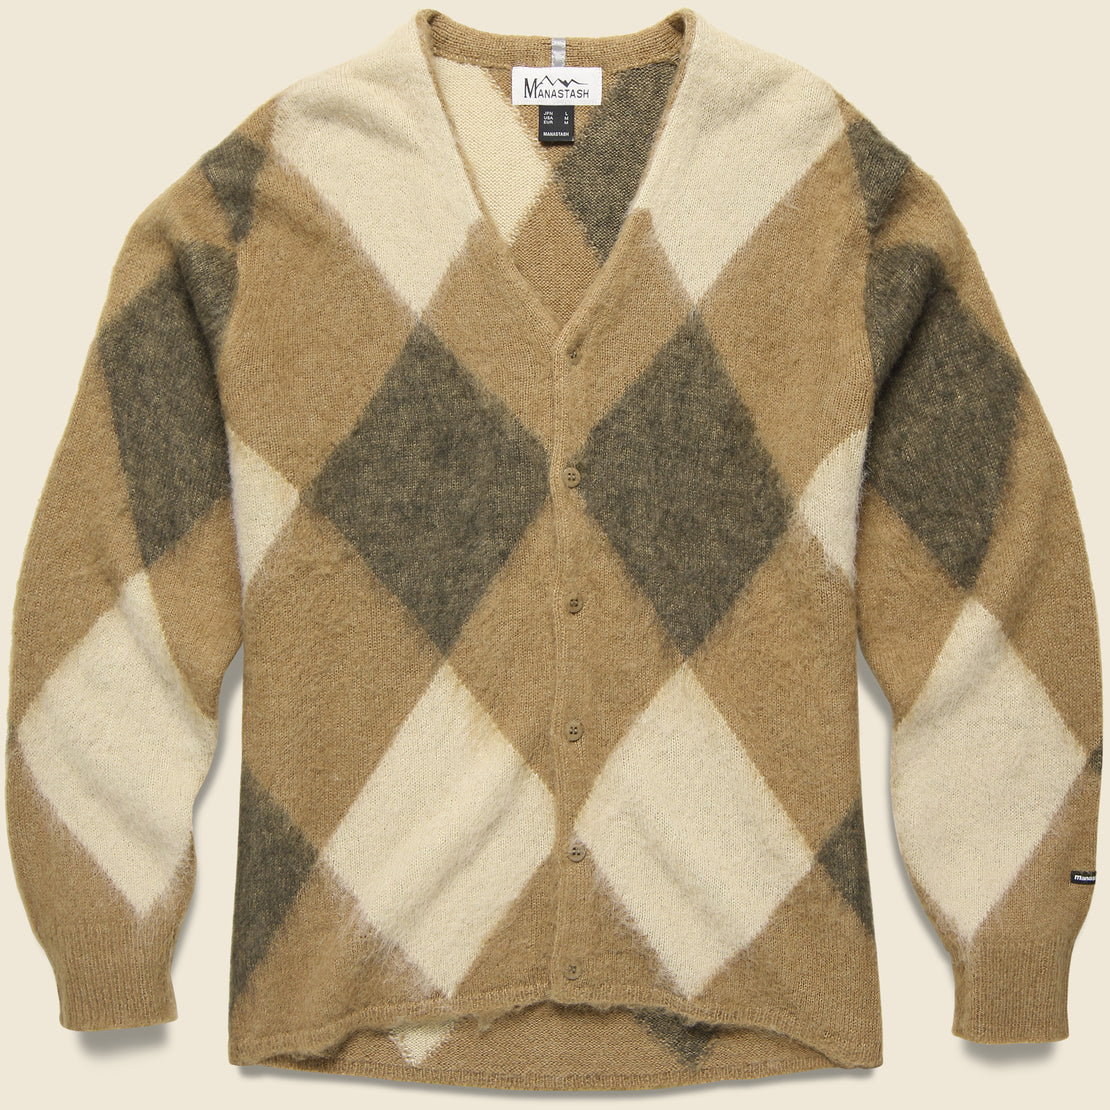 Manastash Aberdeen Kurtigan Sweater - Beige Argyle